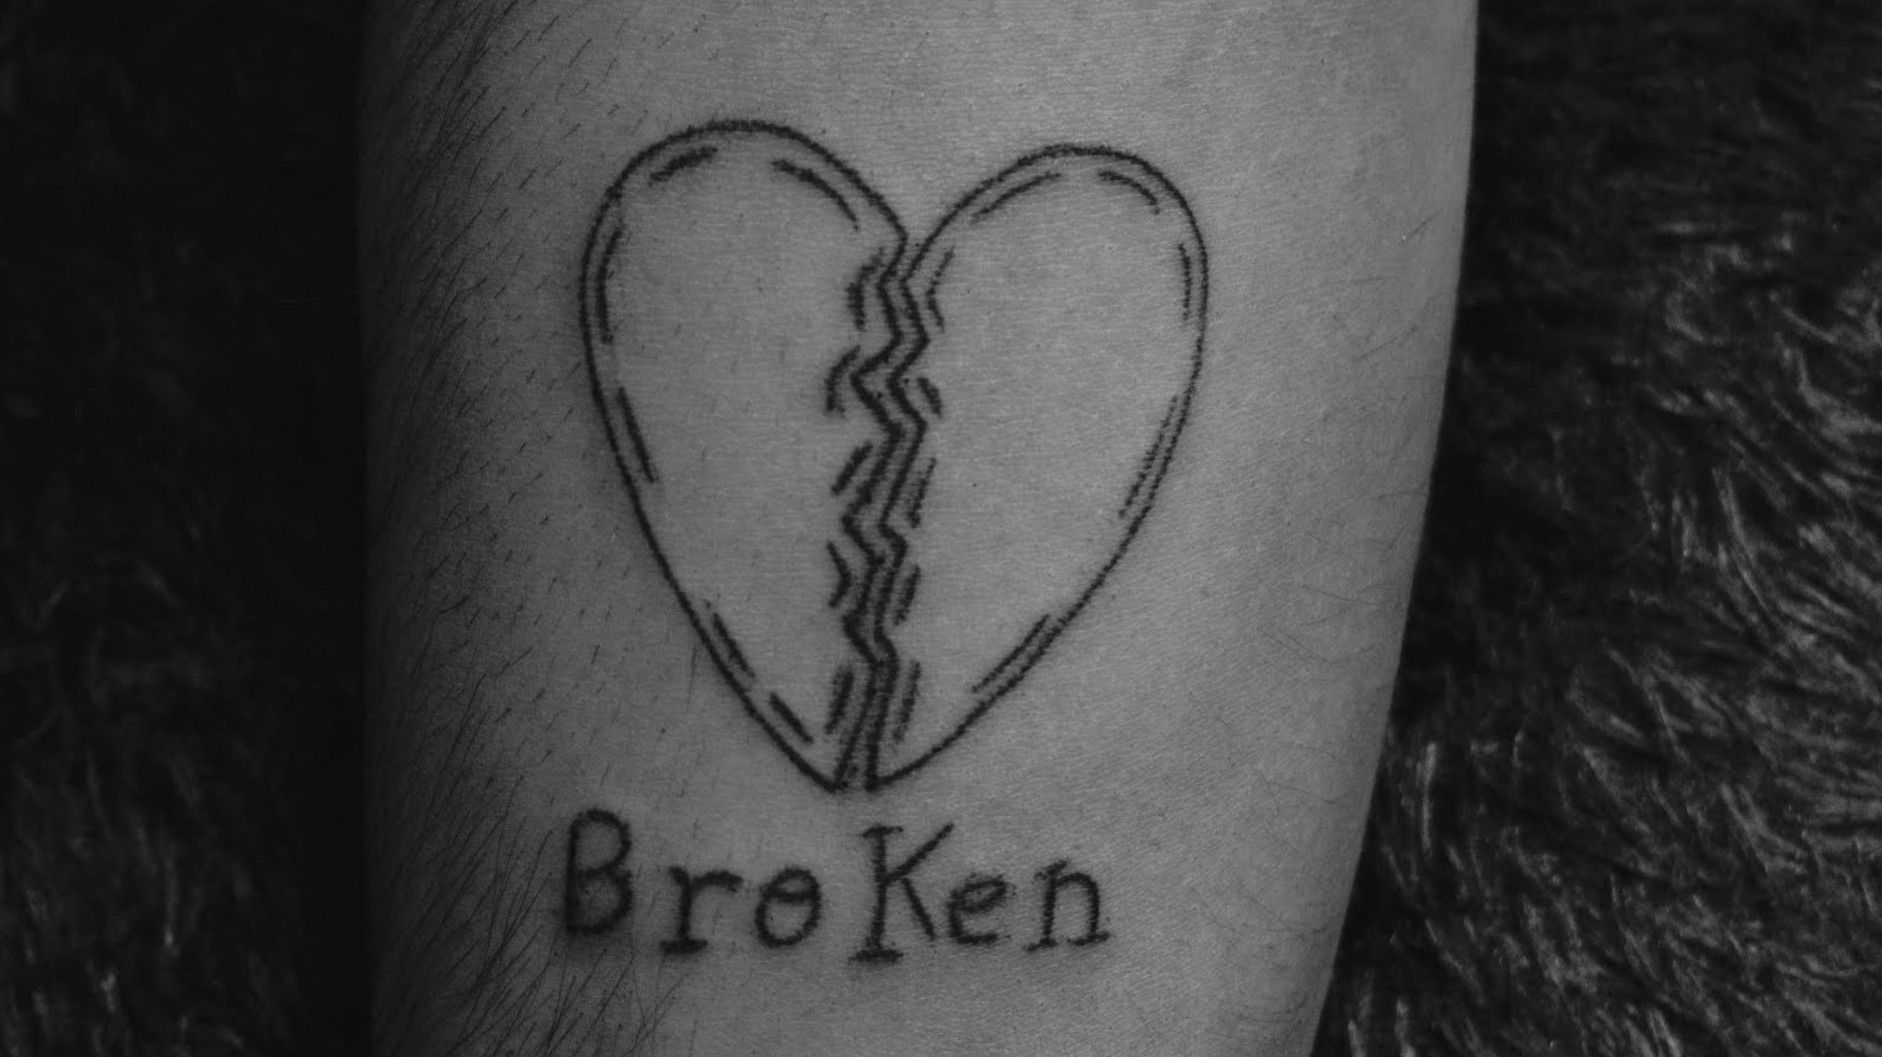 110 Broken Heart Tattoo Stock Photos Pictures  RoyaltyFree Images   iStock